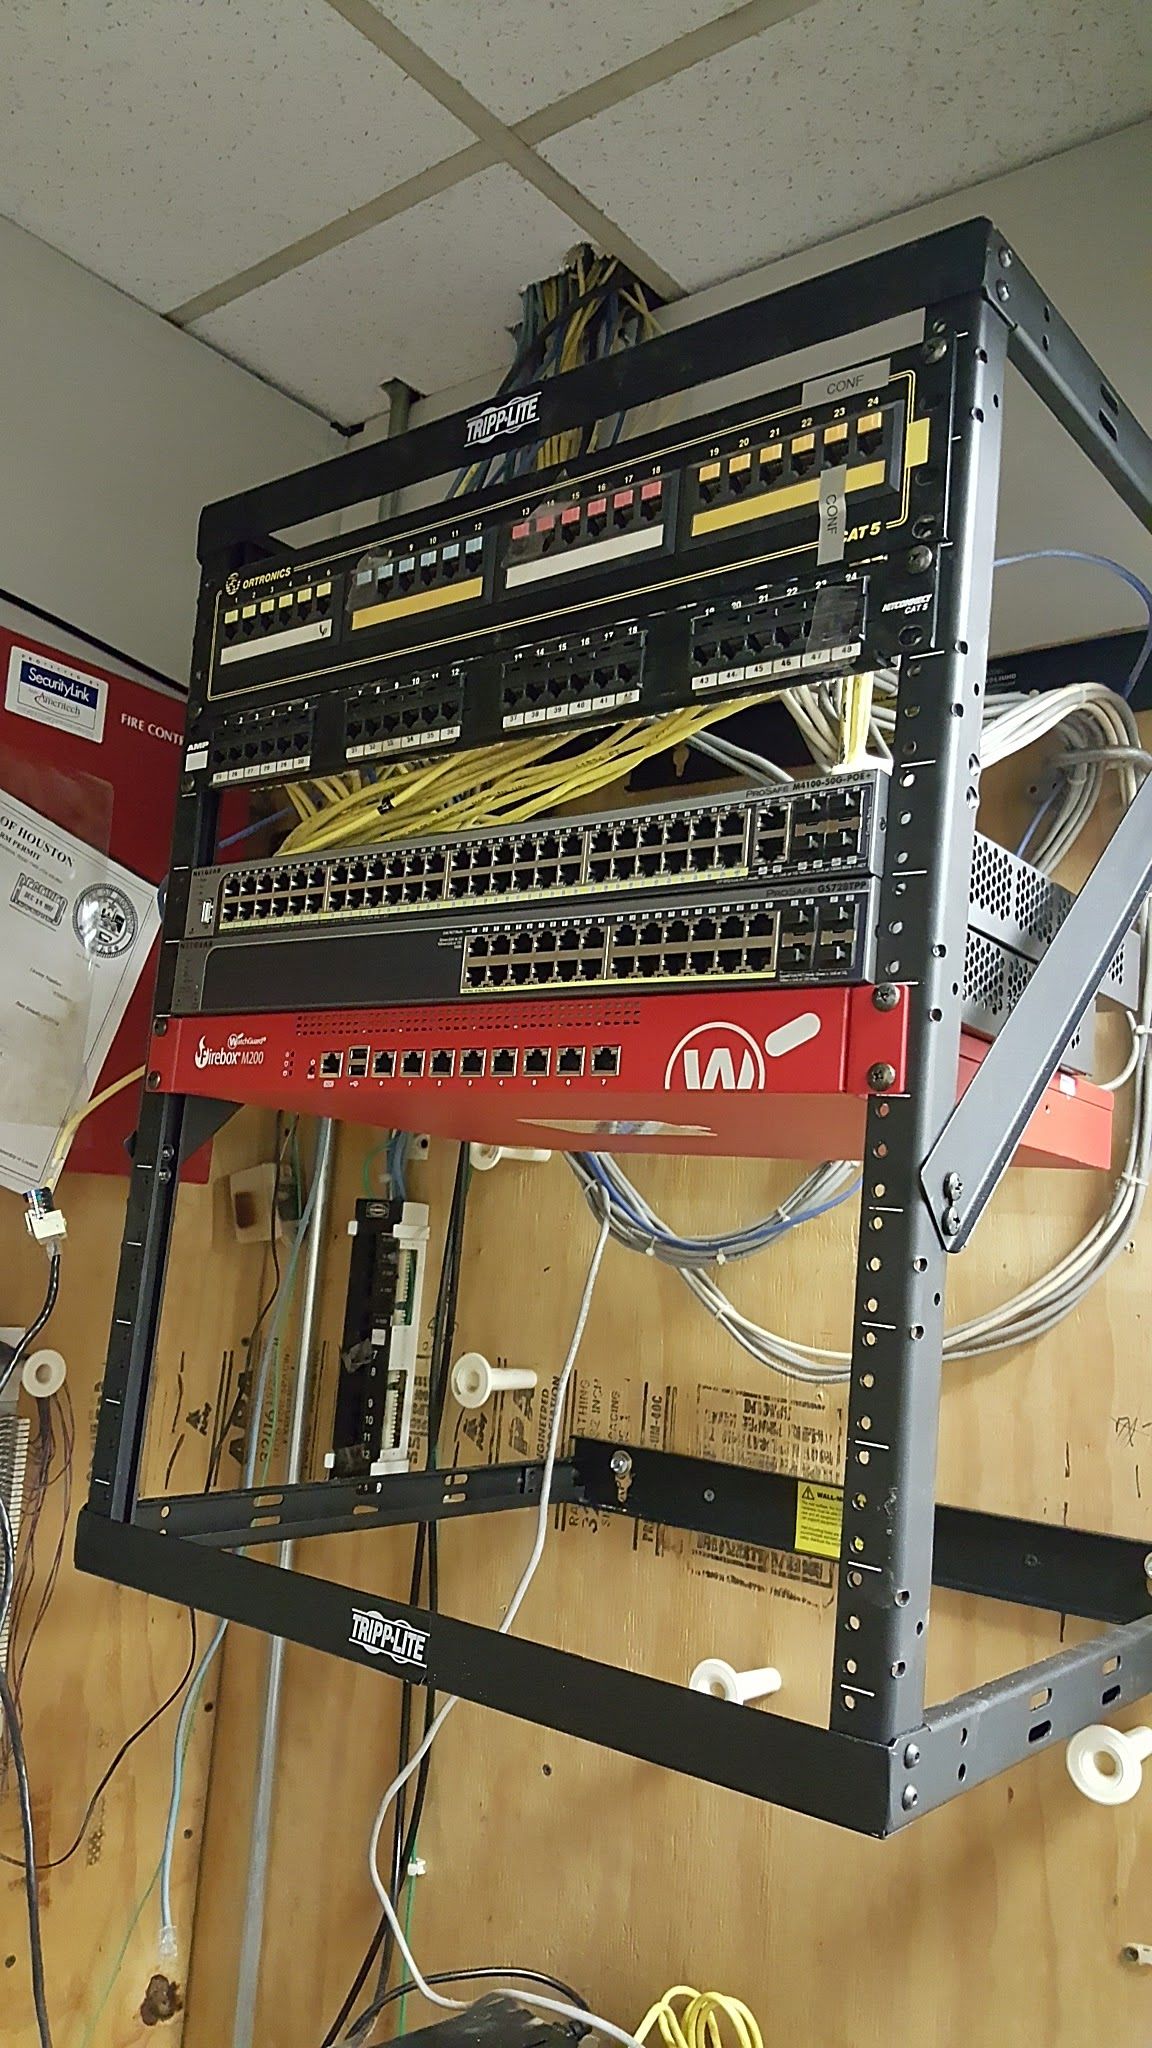 Network Wall Rack Watchguard m300 Netgear Switches